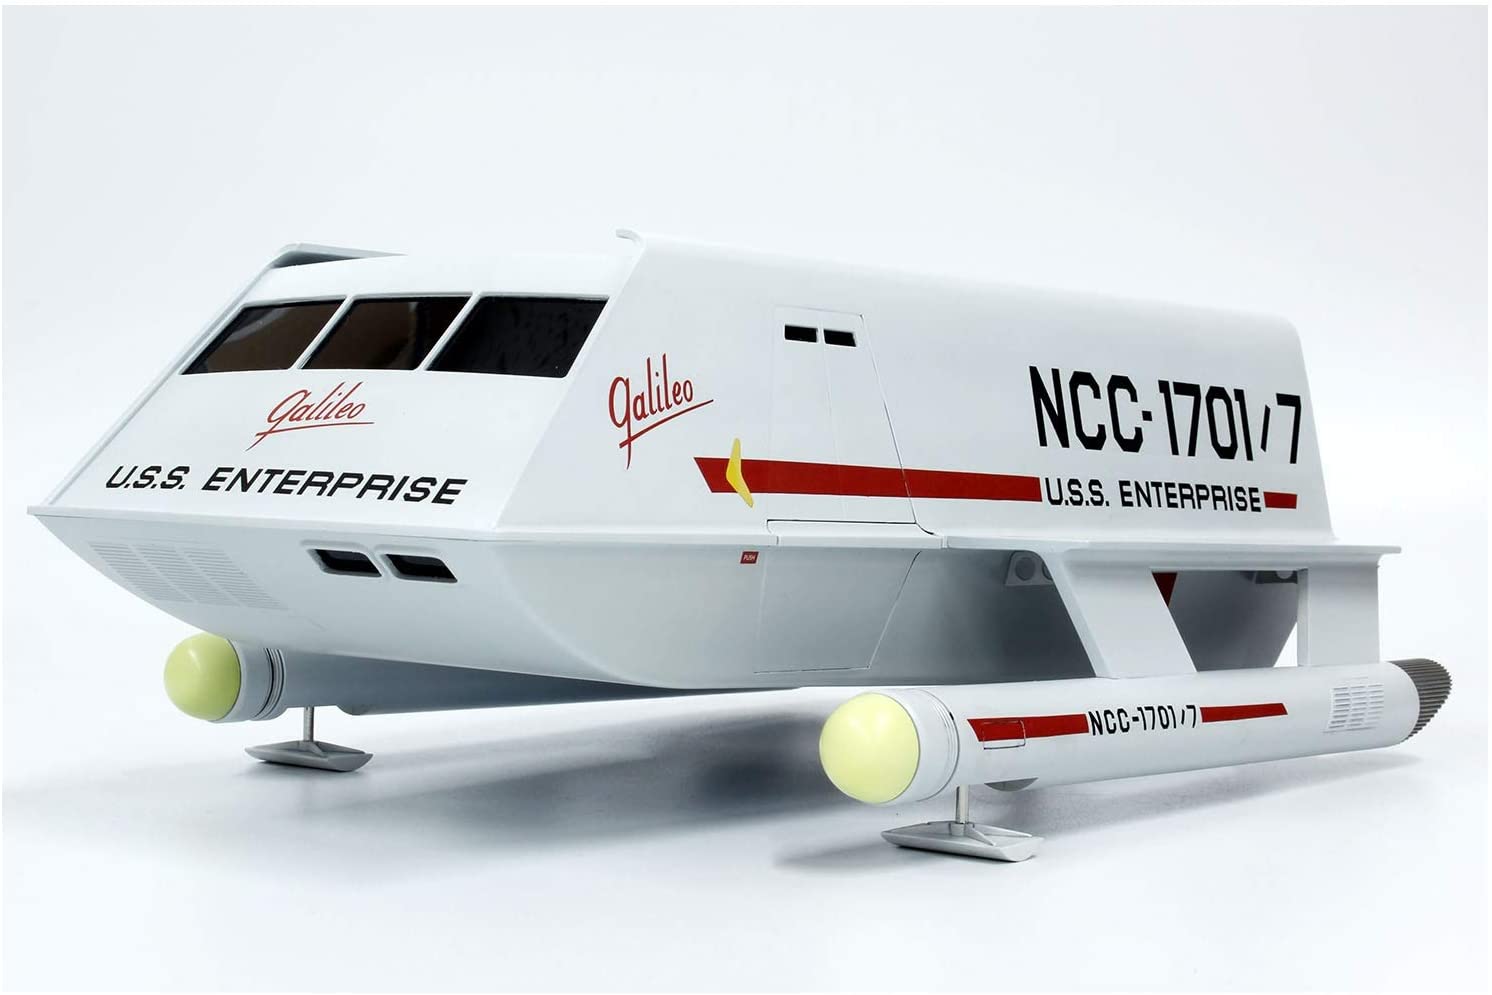 Galileo Shuttlecraft 1:32 Polar Lights 909 Star Trek